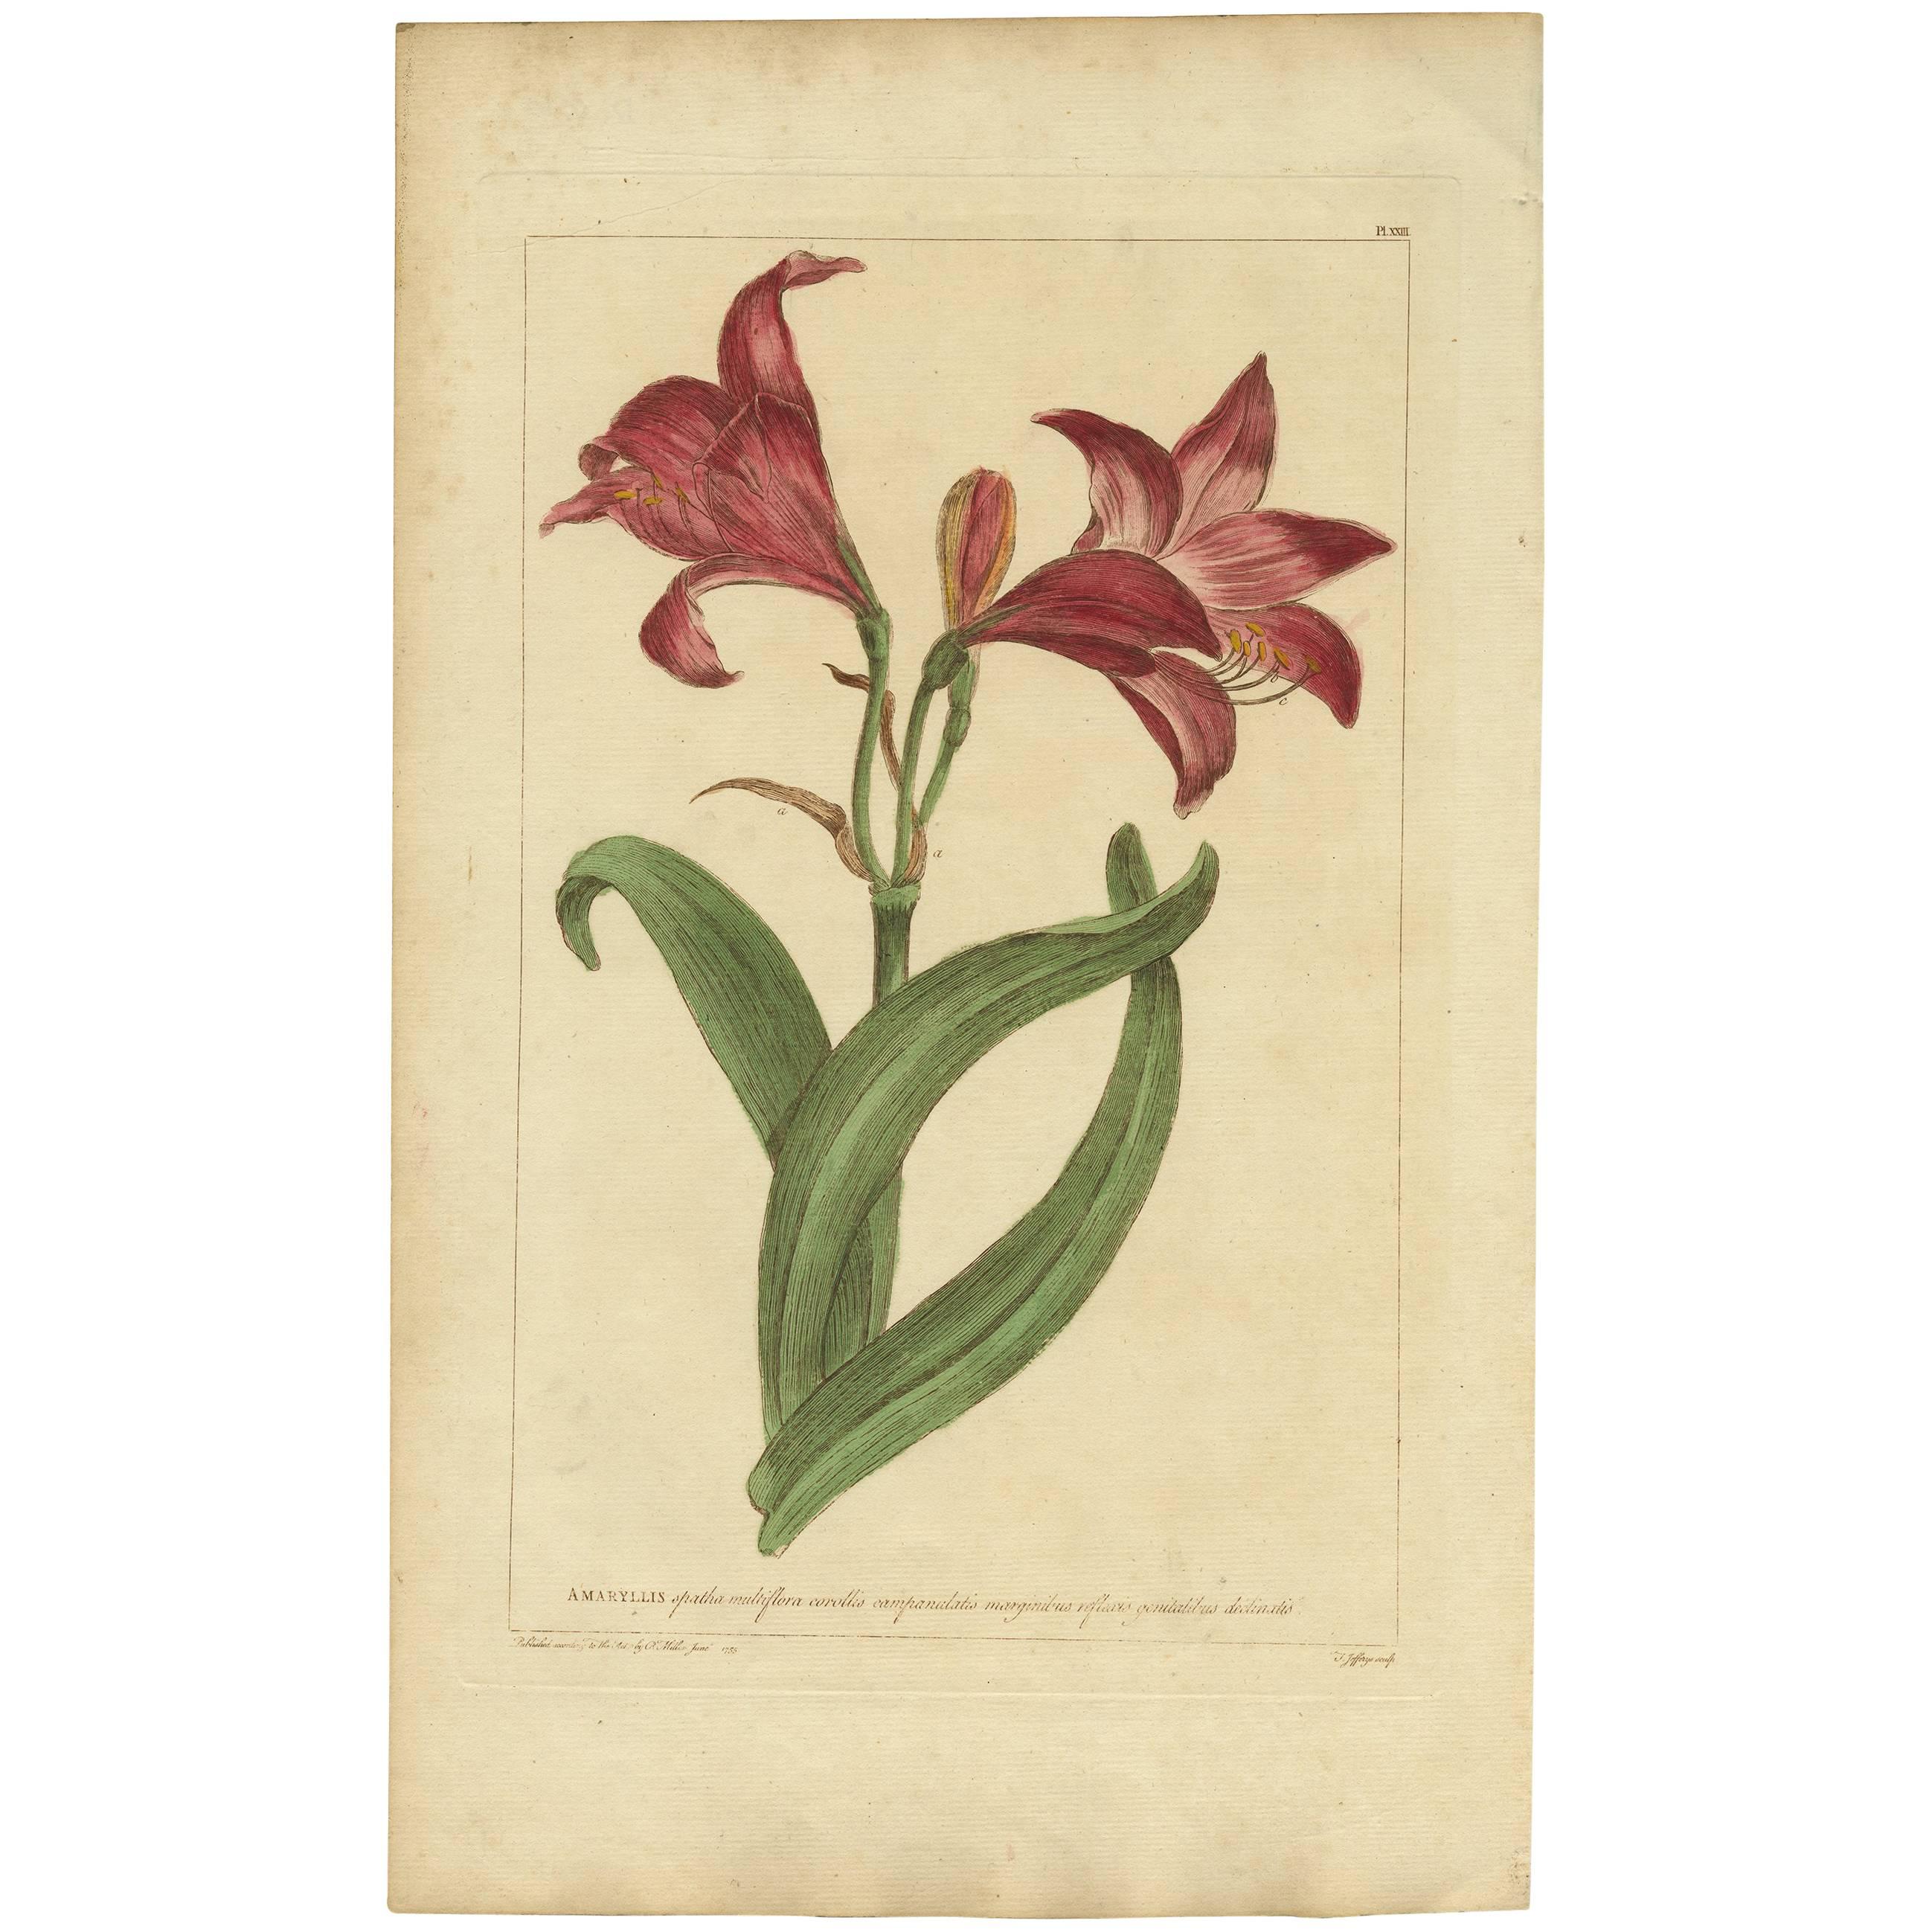 Antique Flower Print 'Amaryllis' by P. Miller, 1755